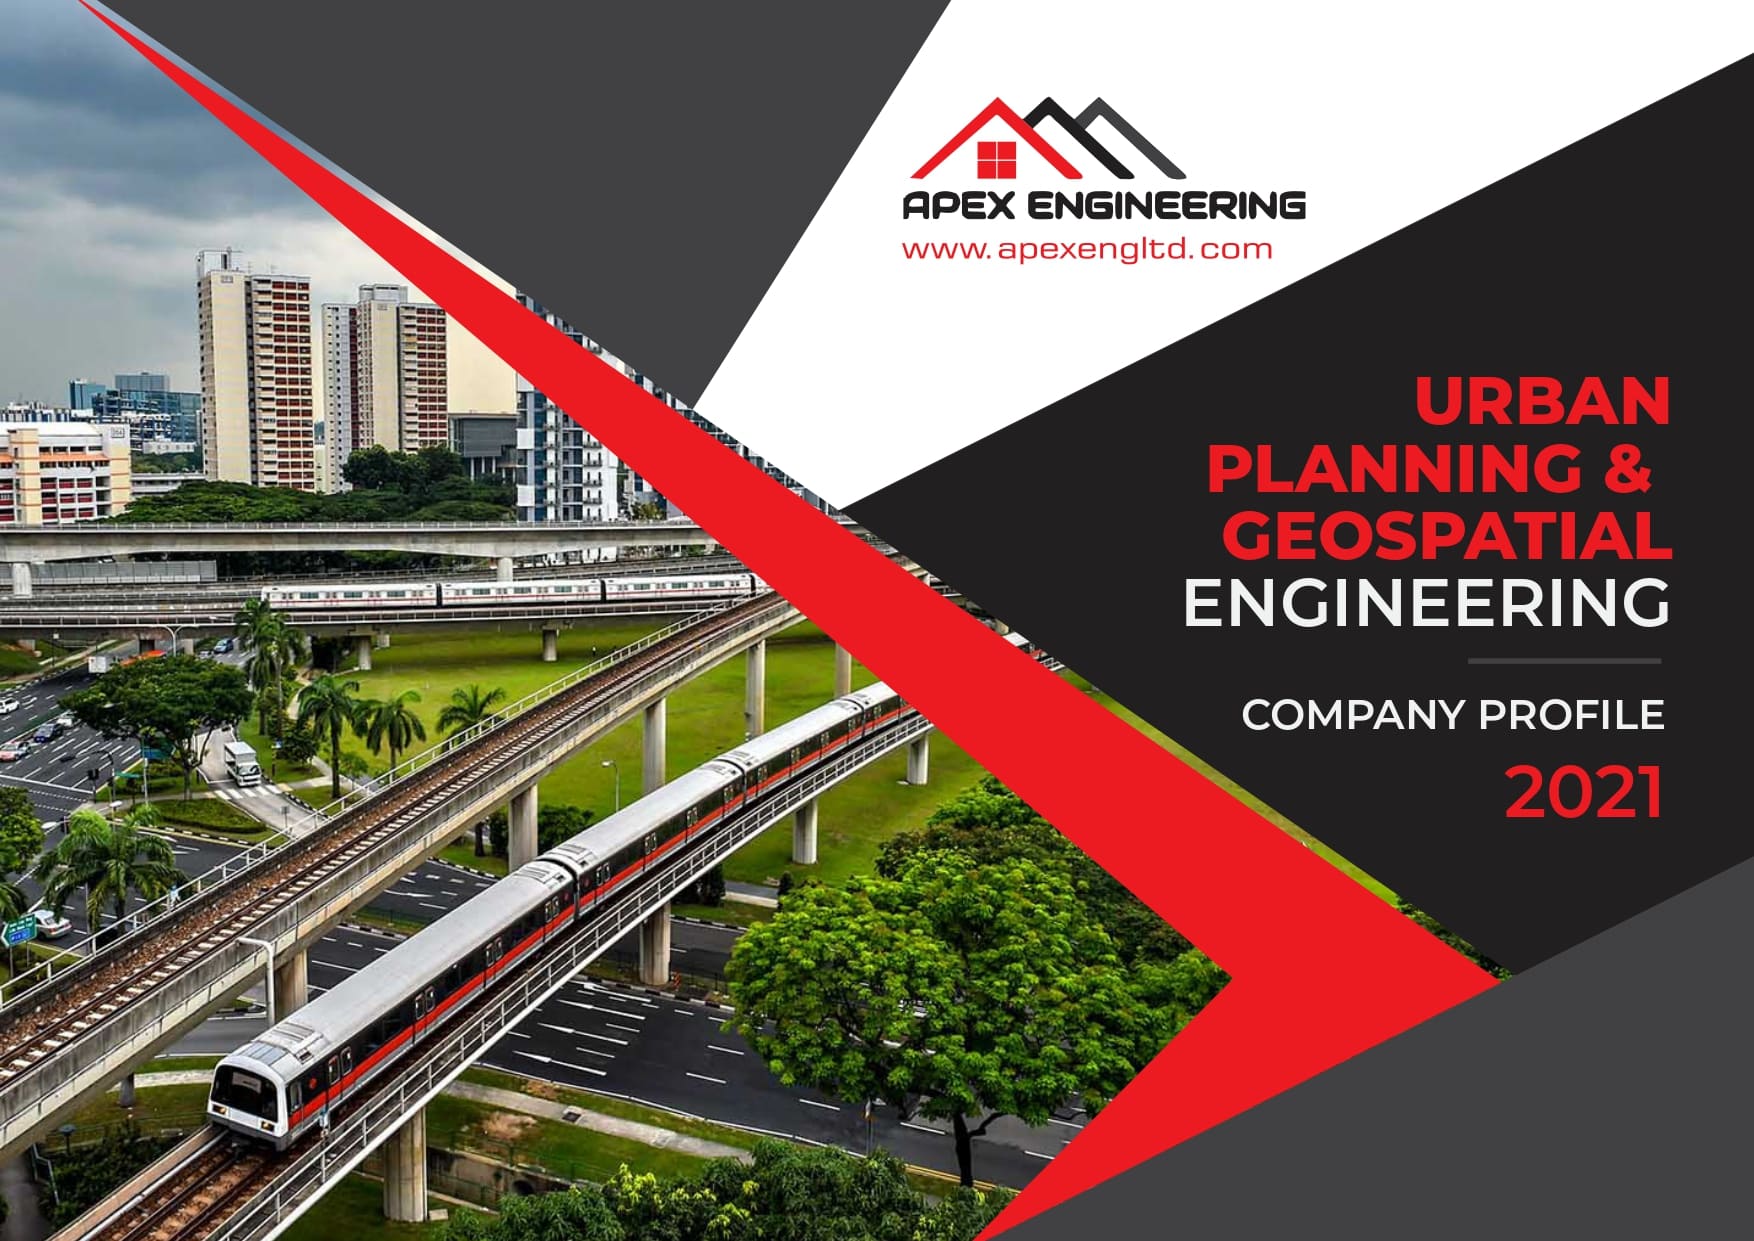 Apex Engineering Company Profile